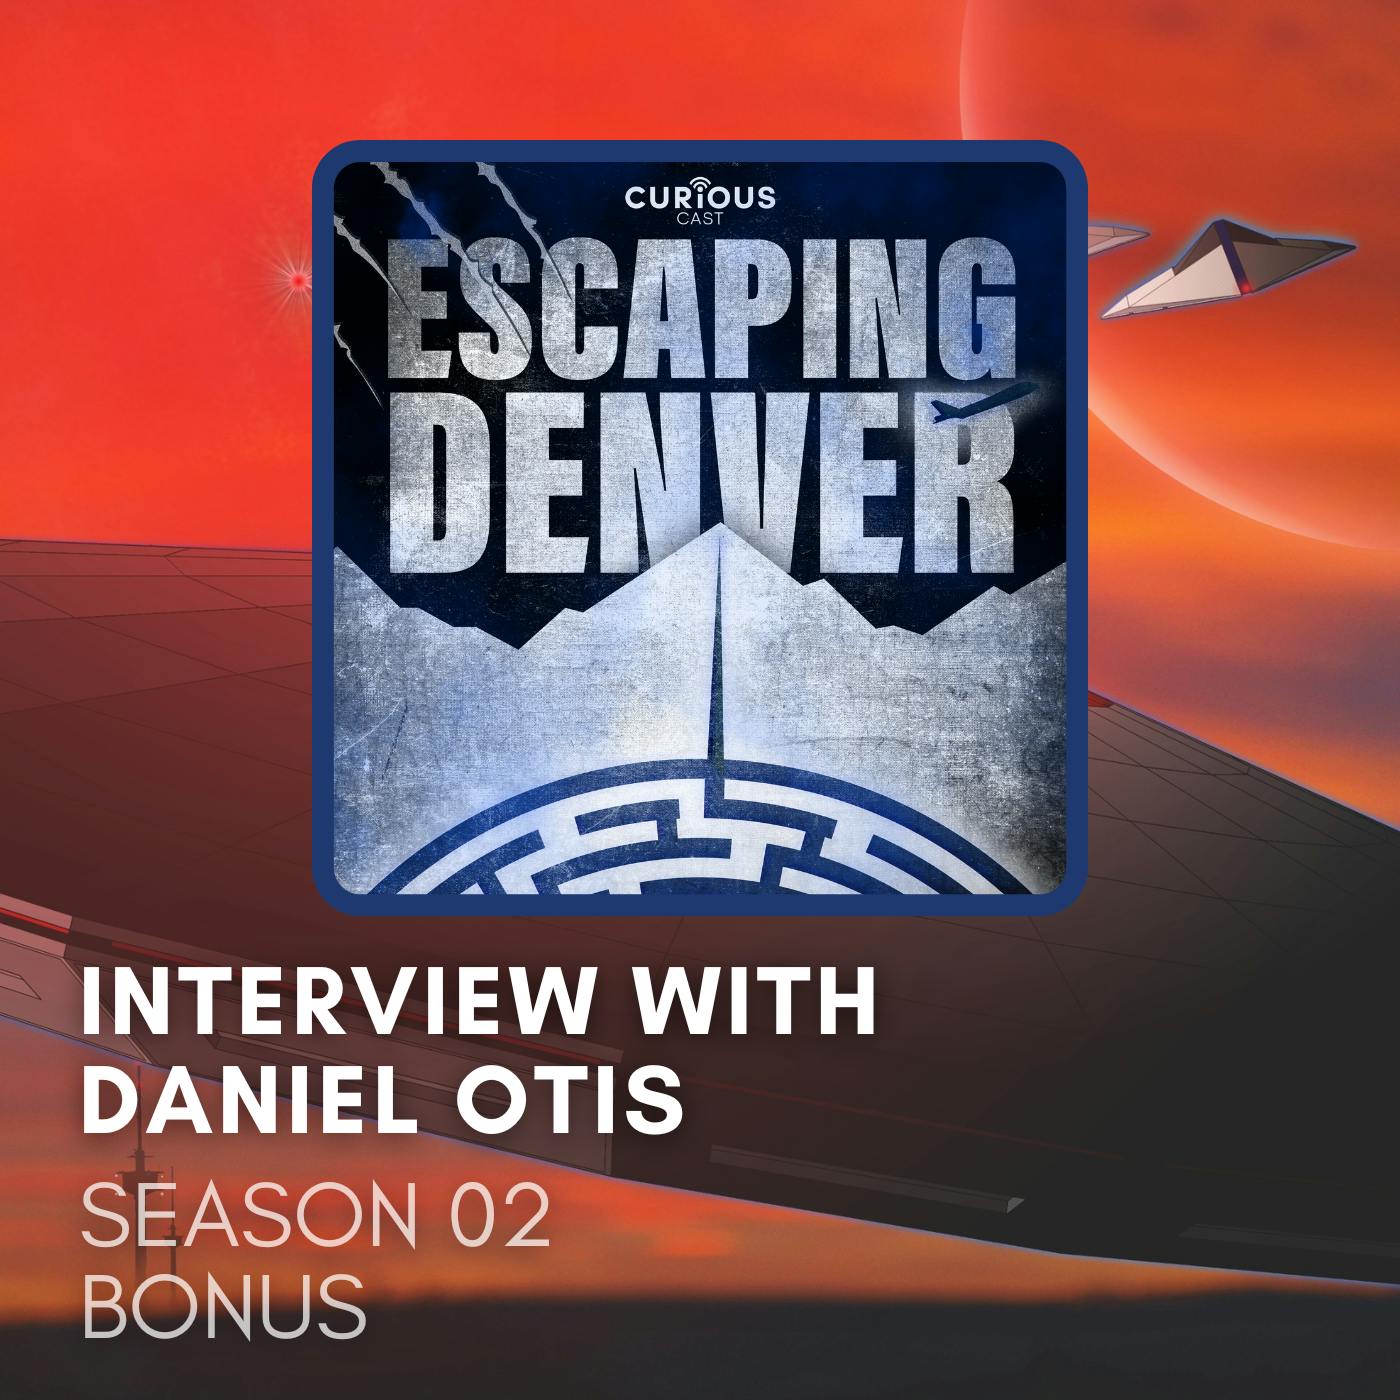 Interview with Daniel Otis